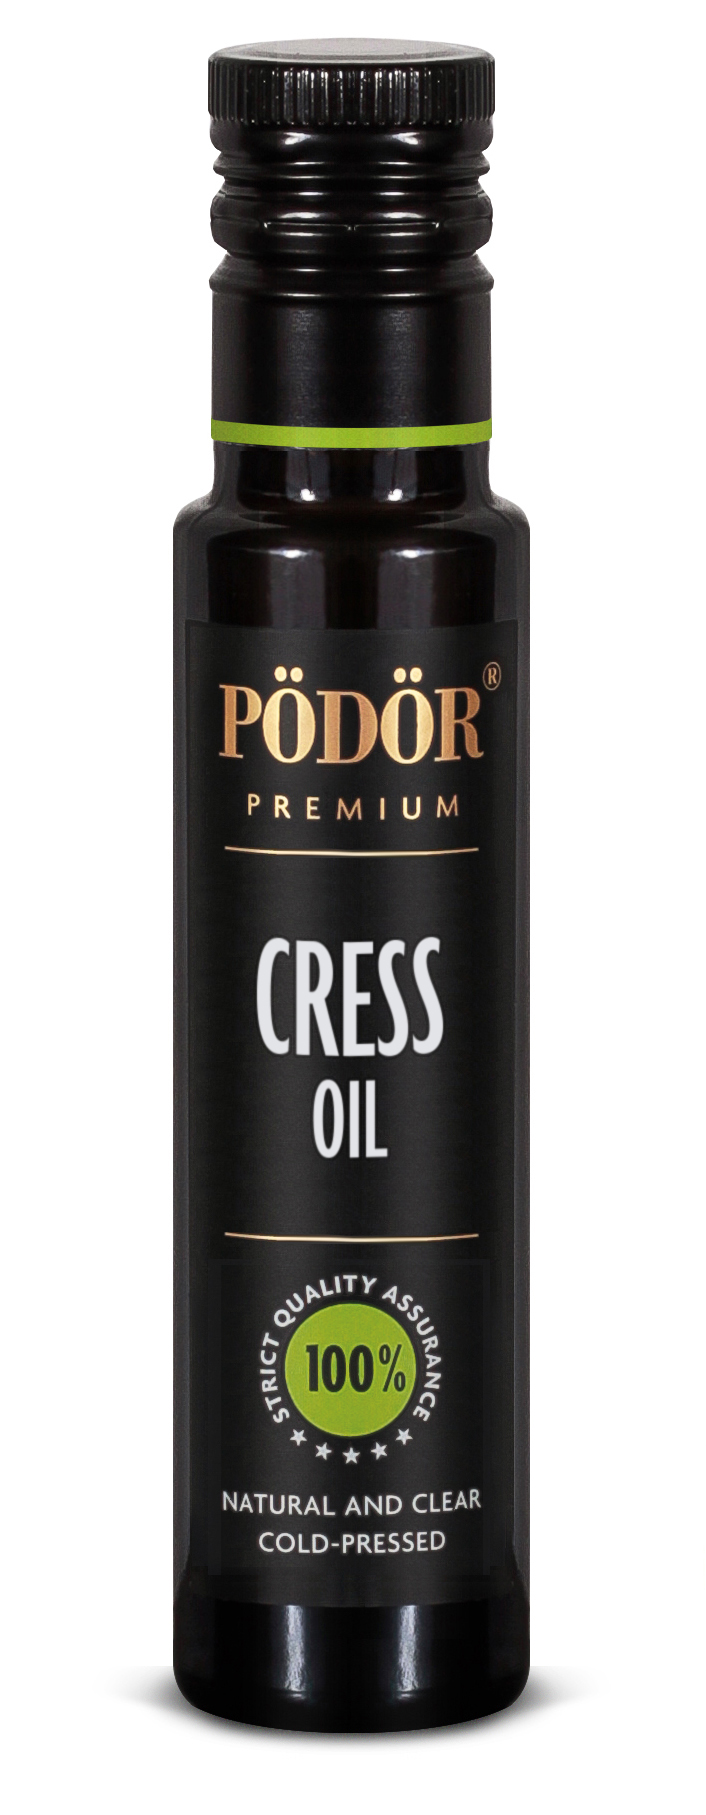 Cress oil